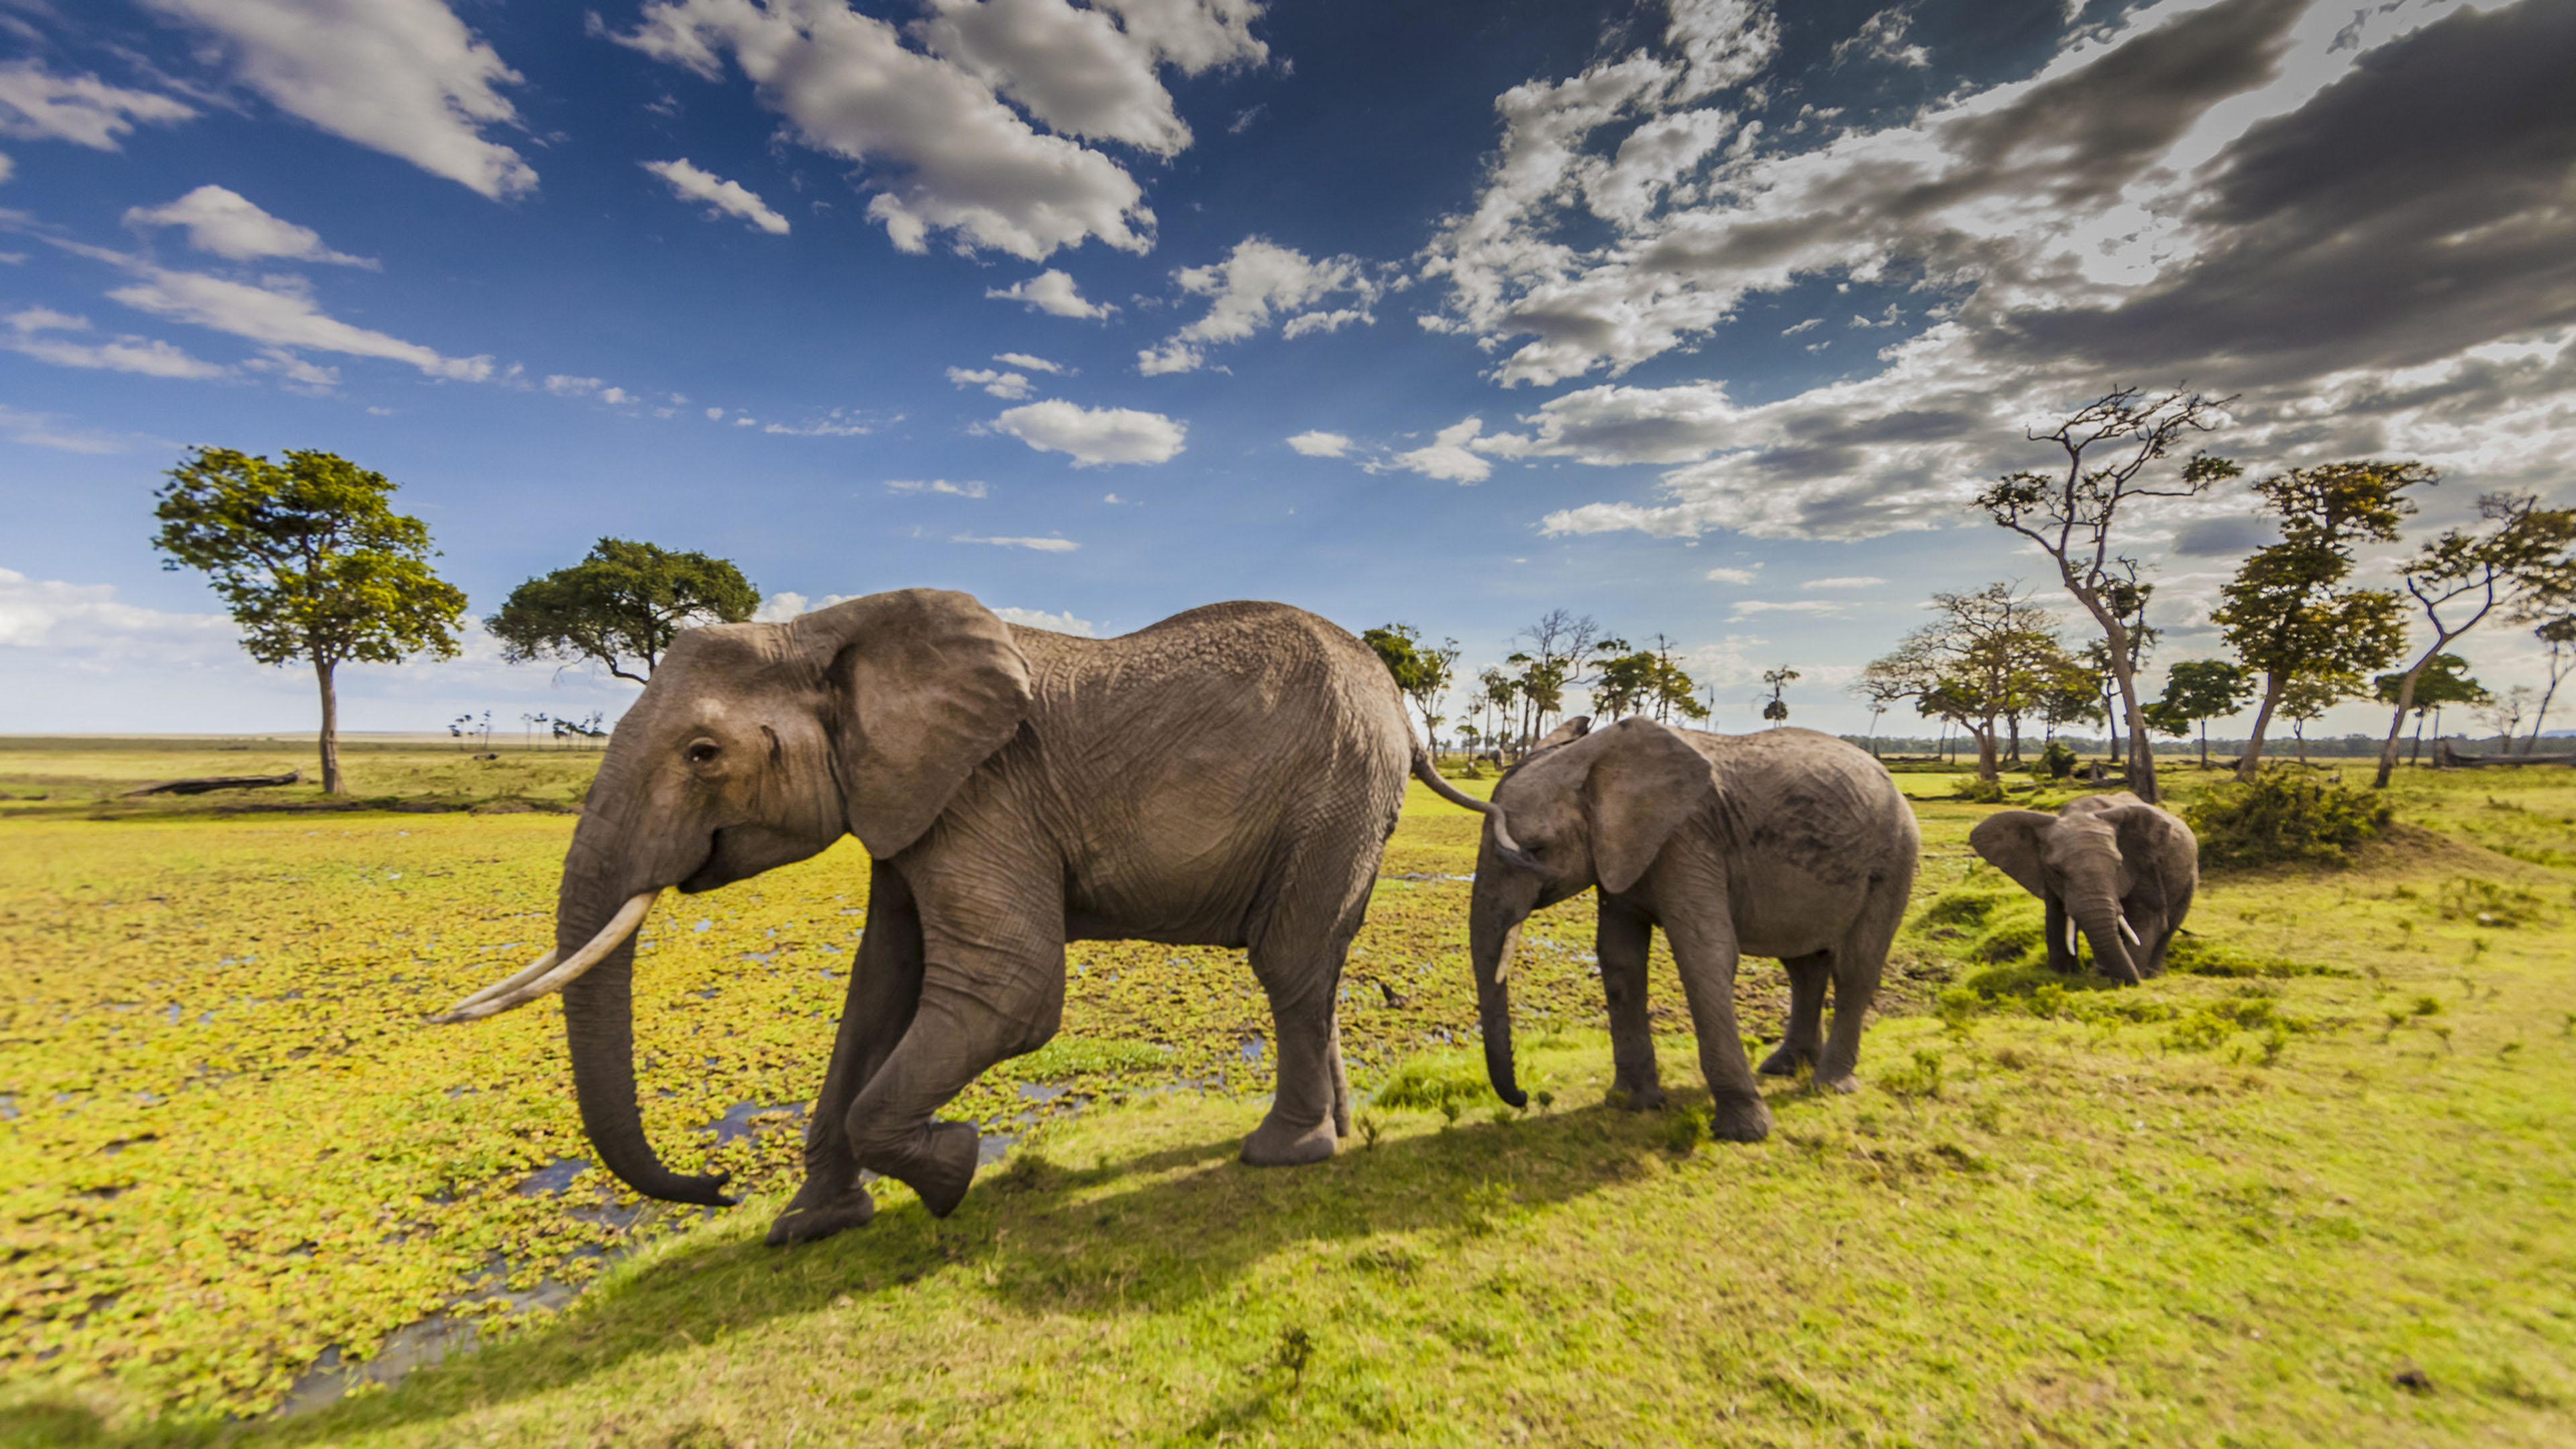 Animals elephants in maasai mara county park in kenya desktop hd wallpapers for mobile phones and puter x